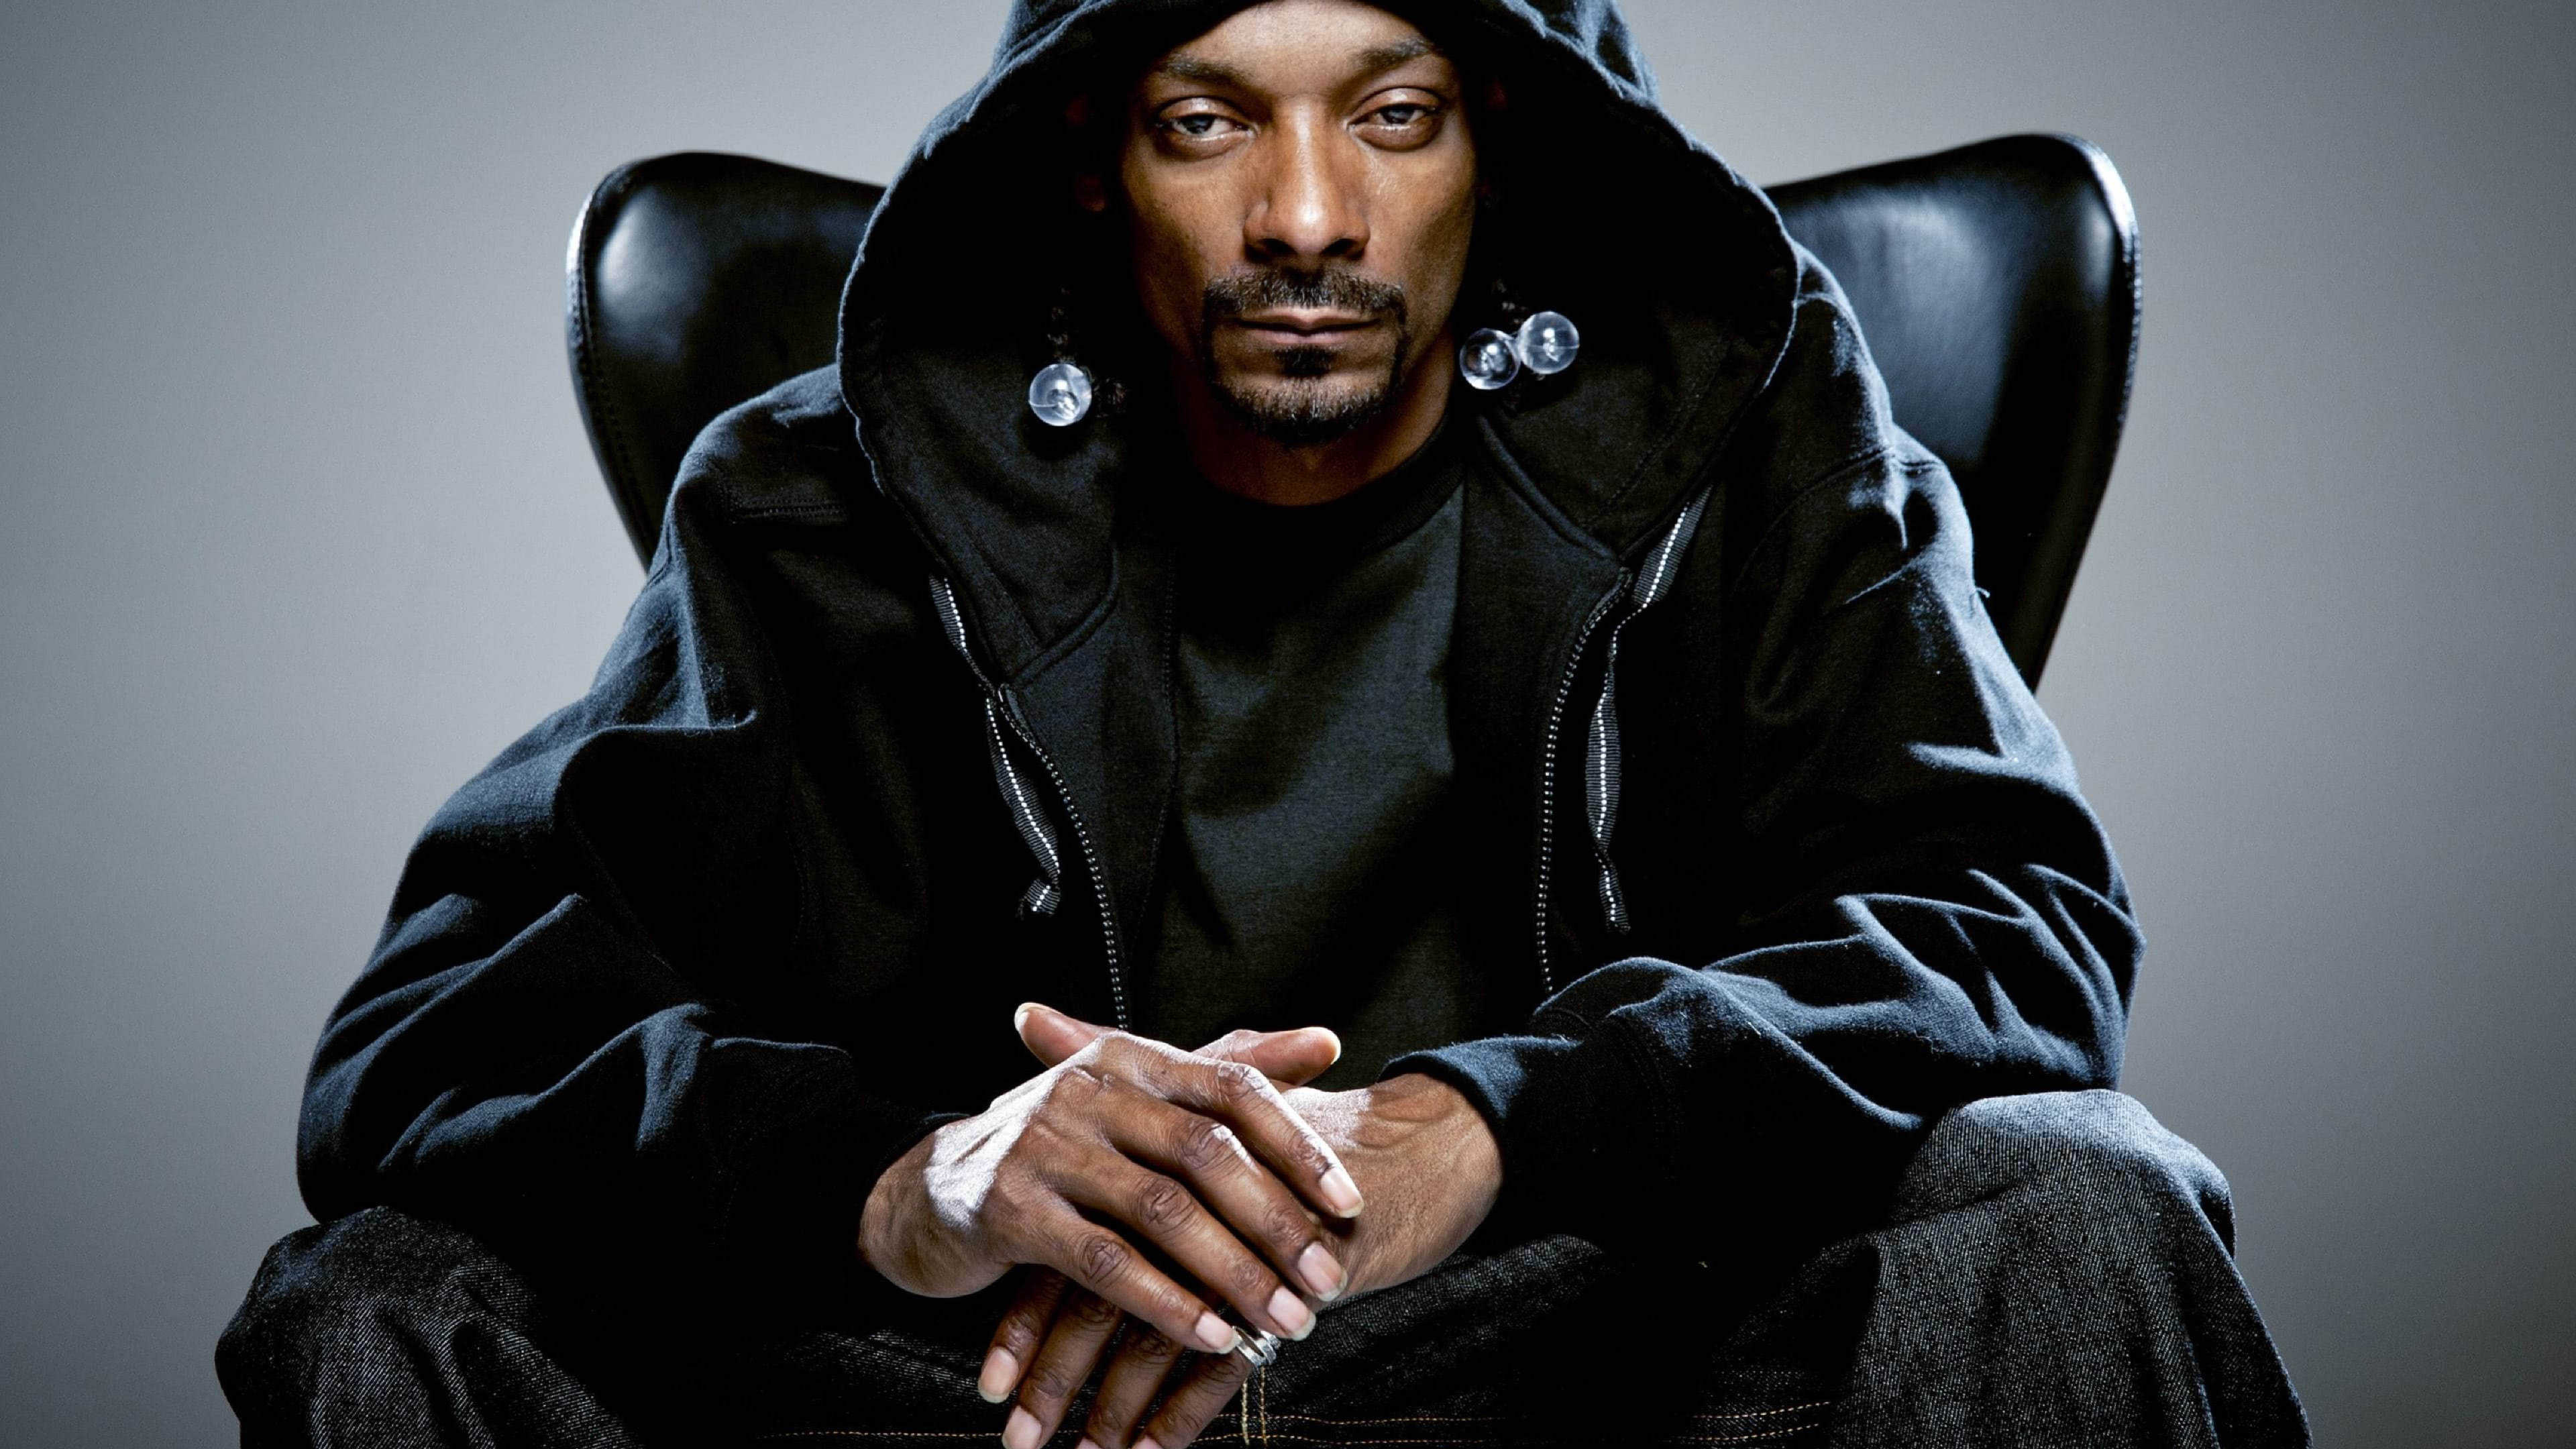 Snoop Dogg, Iconic rapper, High-definition artwork, Visual masterpiece, 3840x2160 4K Desktop